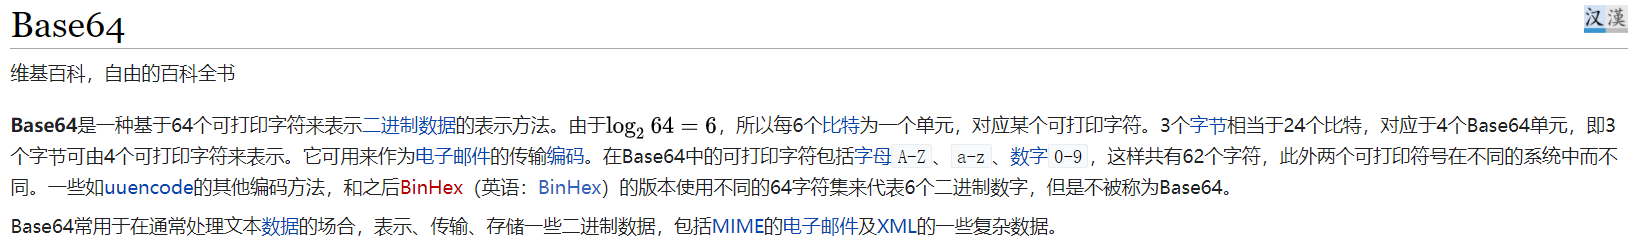 Base64维基百科